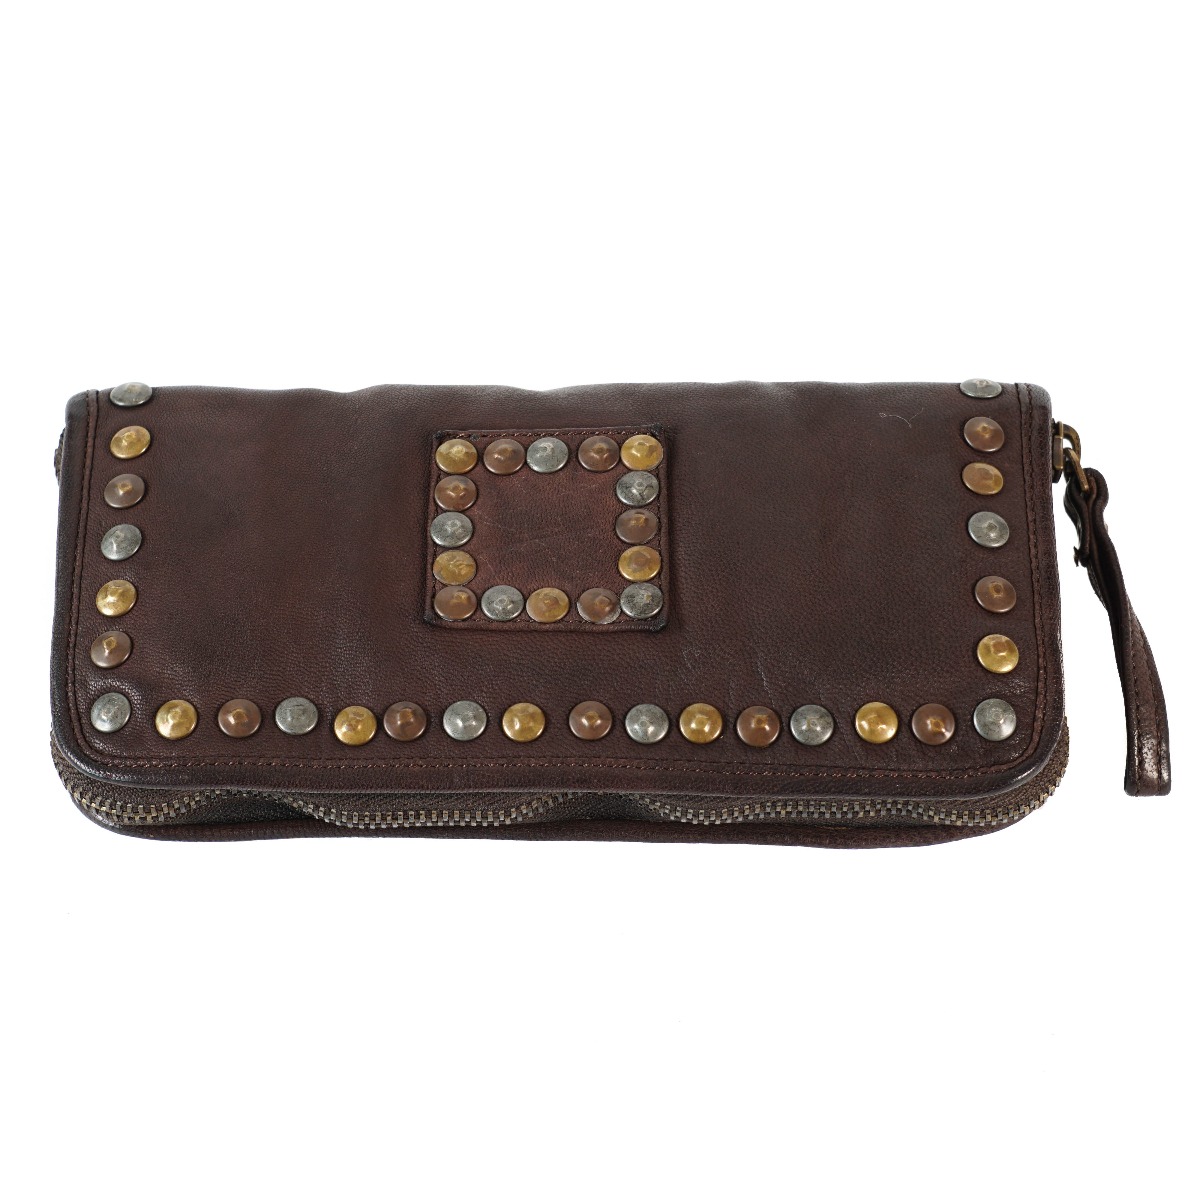 Brown women leather wallet